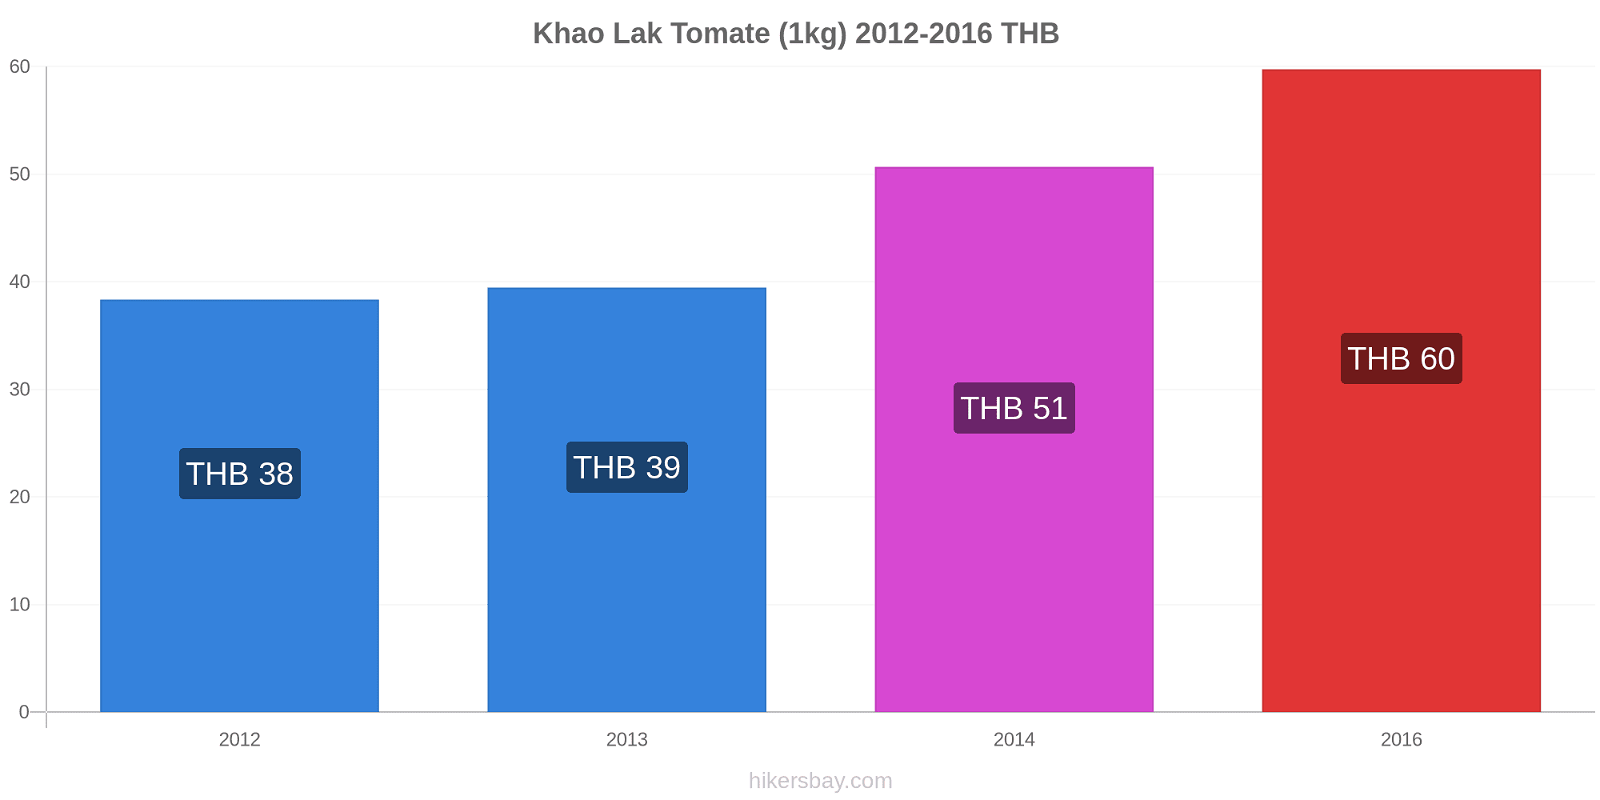 Khao Lak modificări de preț Tomate (1kg) hikersbay.com